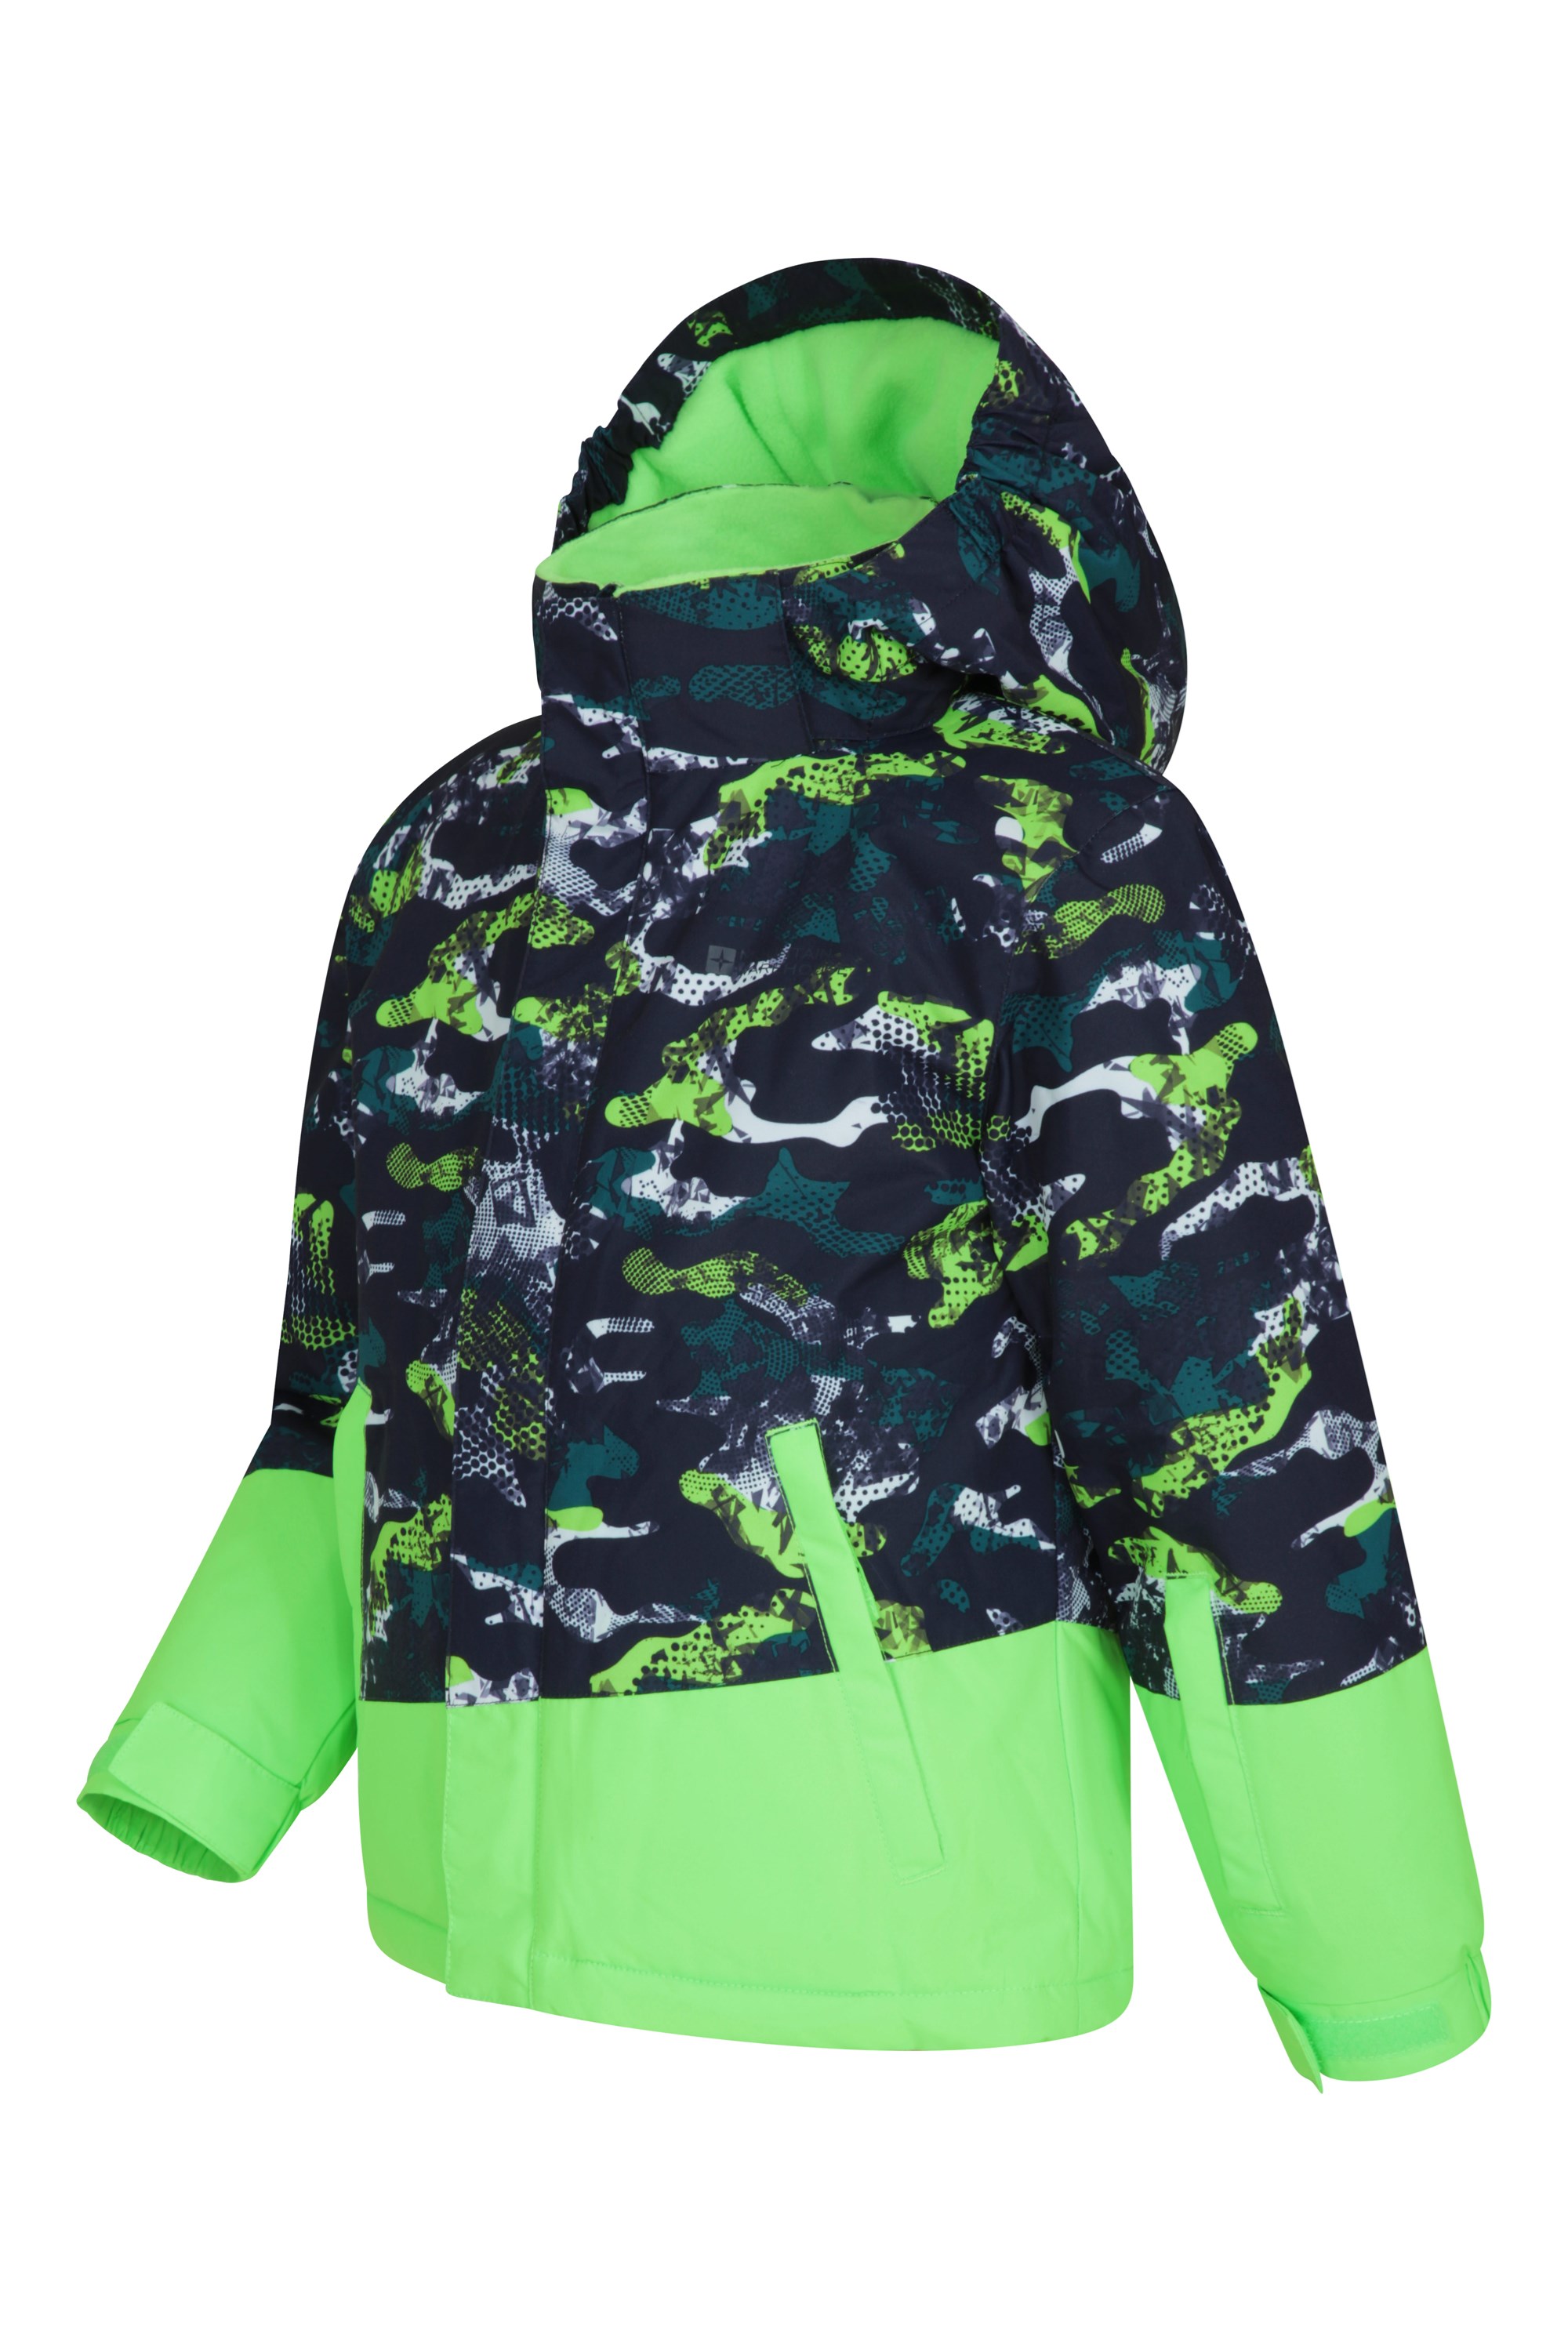 Mogal Printed Kids Ski Jacket | Mountain Warehouse US